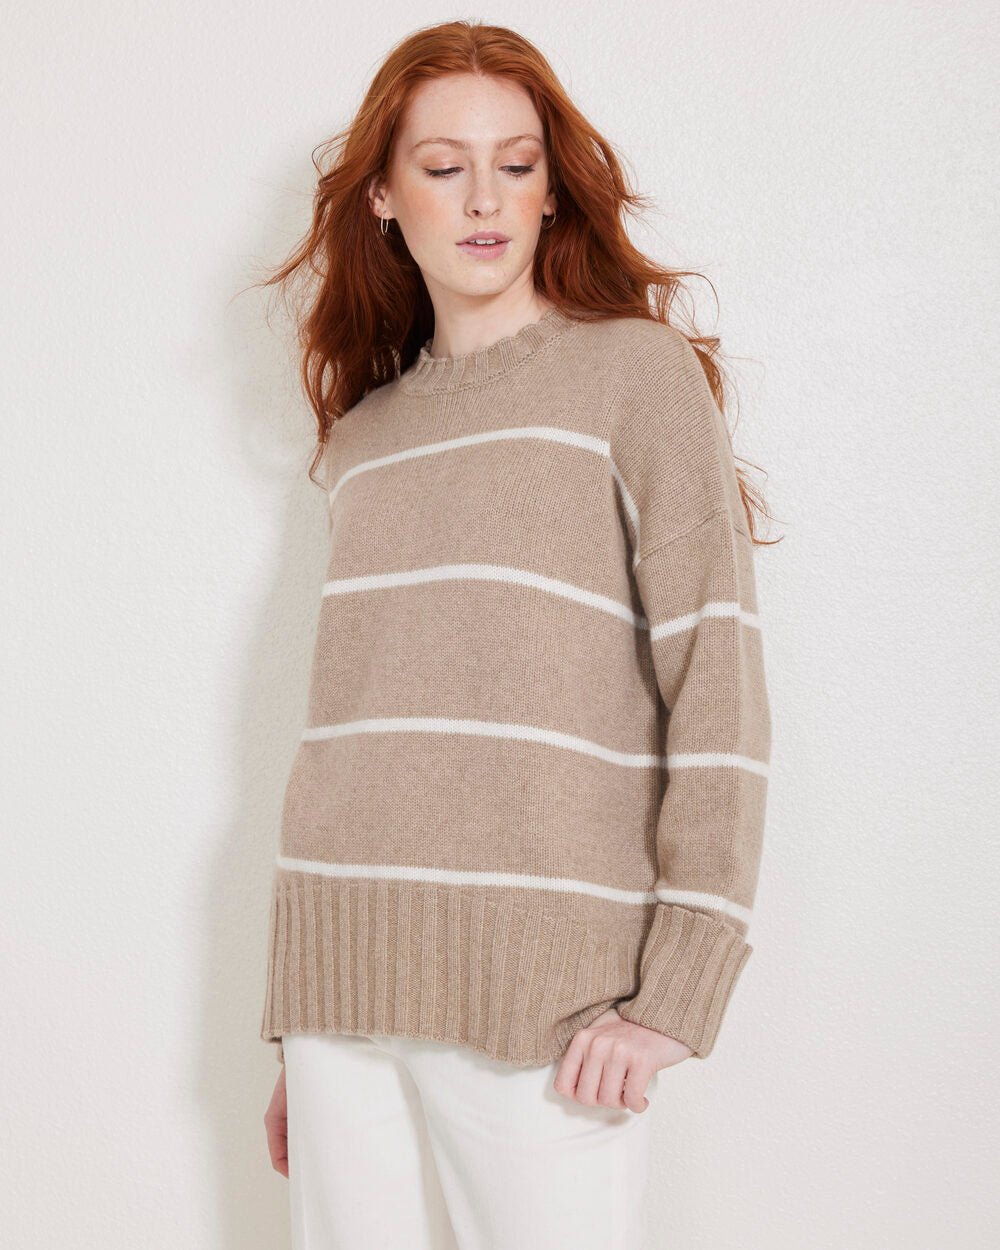 Mila Cashmere Crewneck Sweater - Not Monday